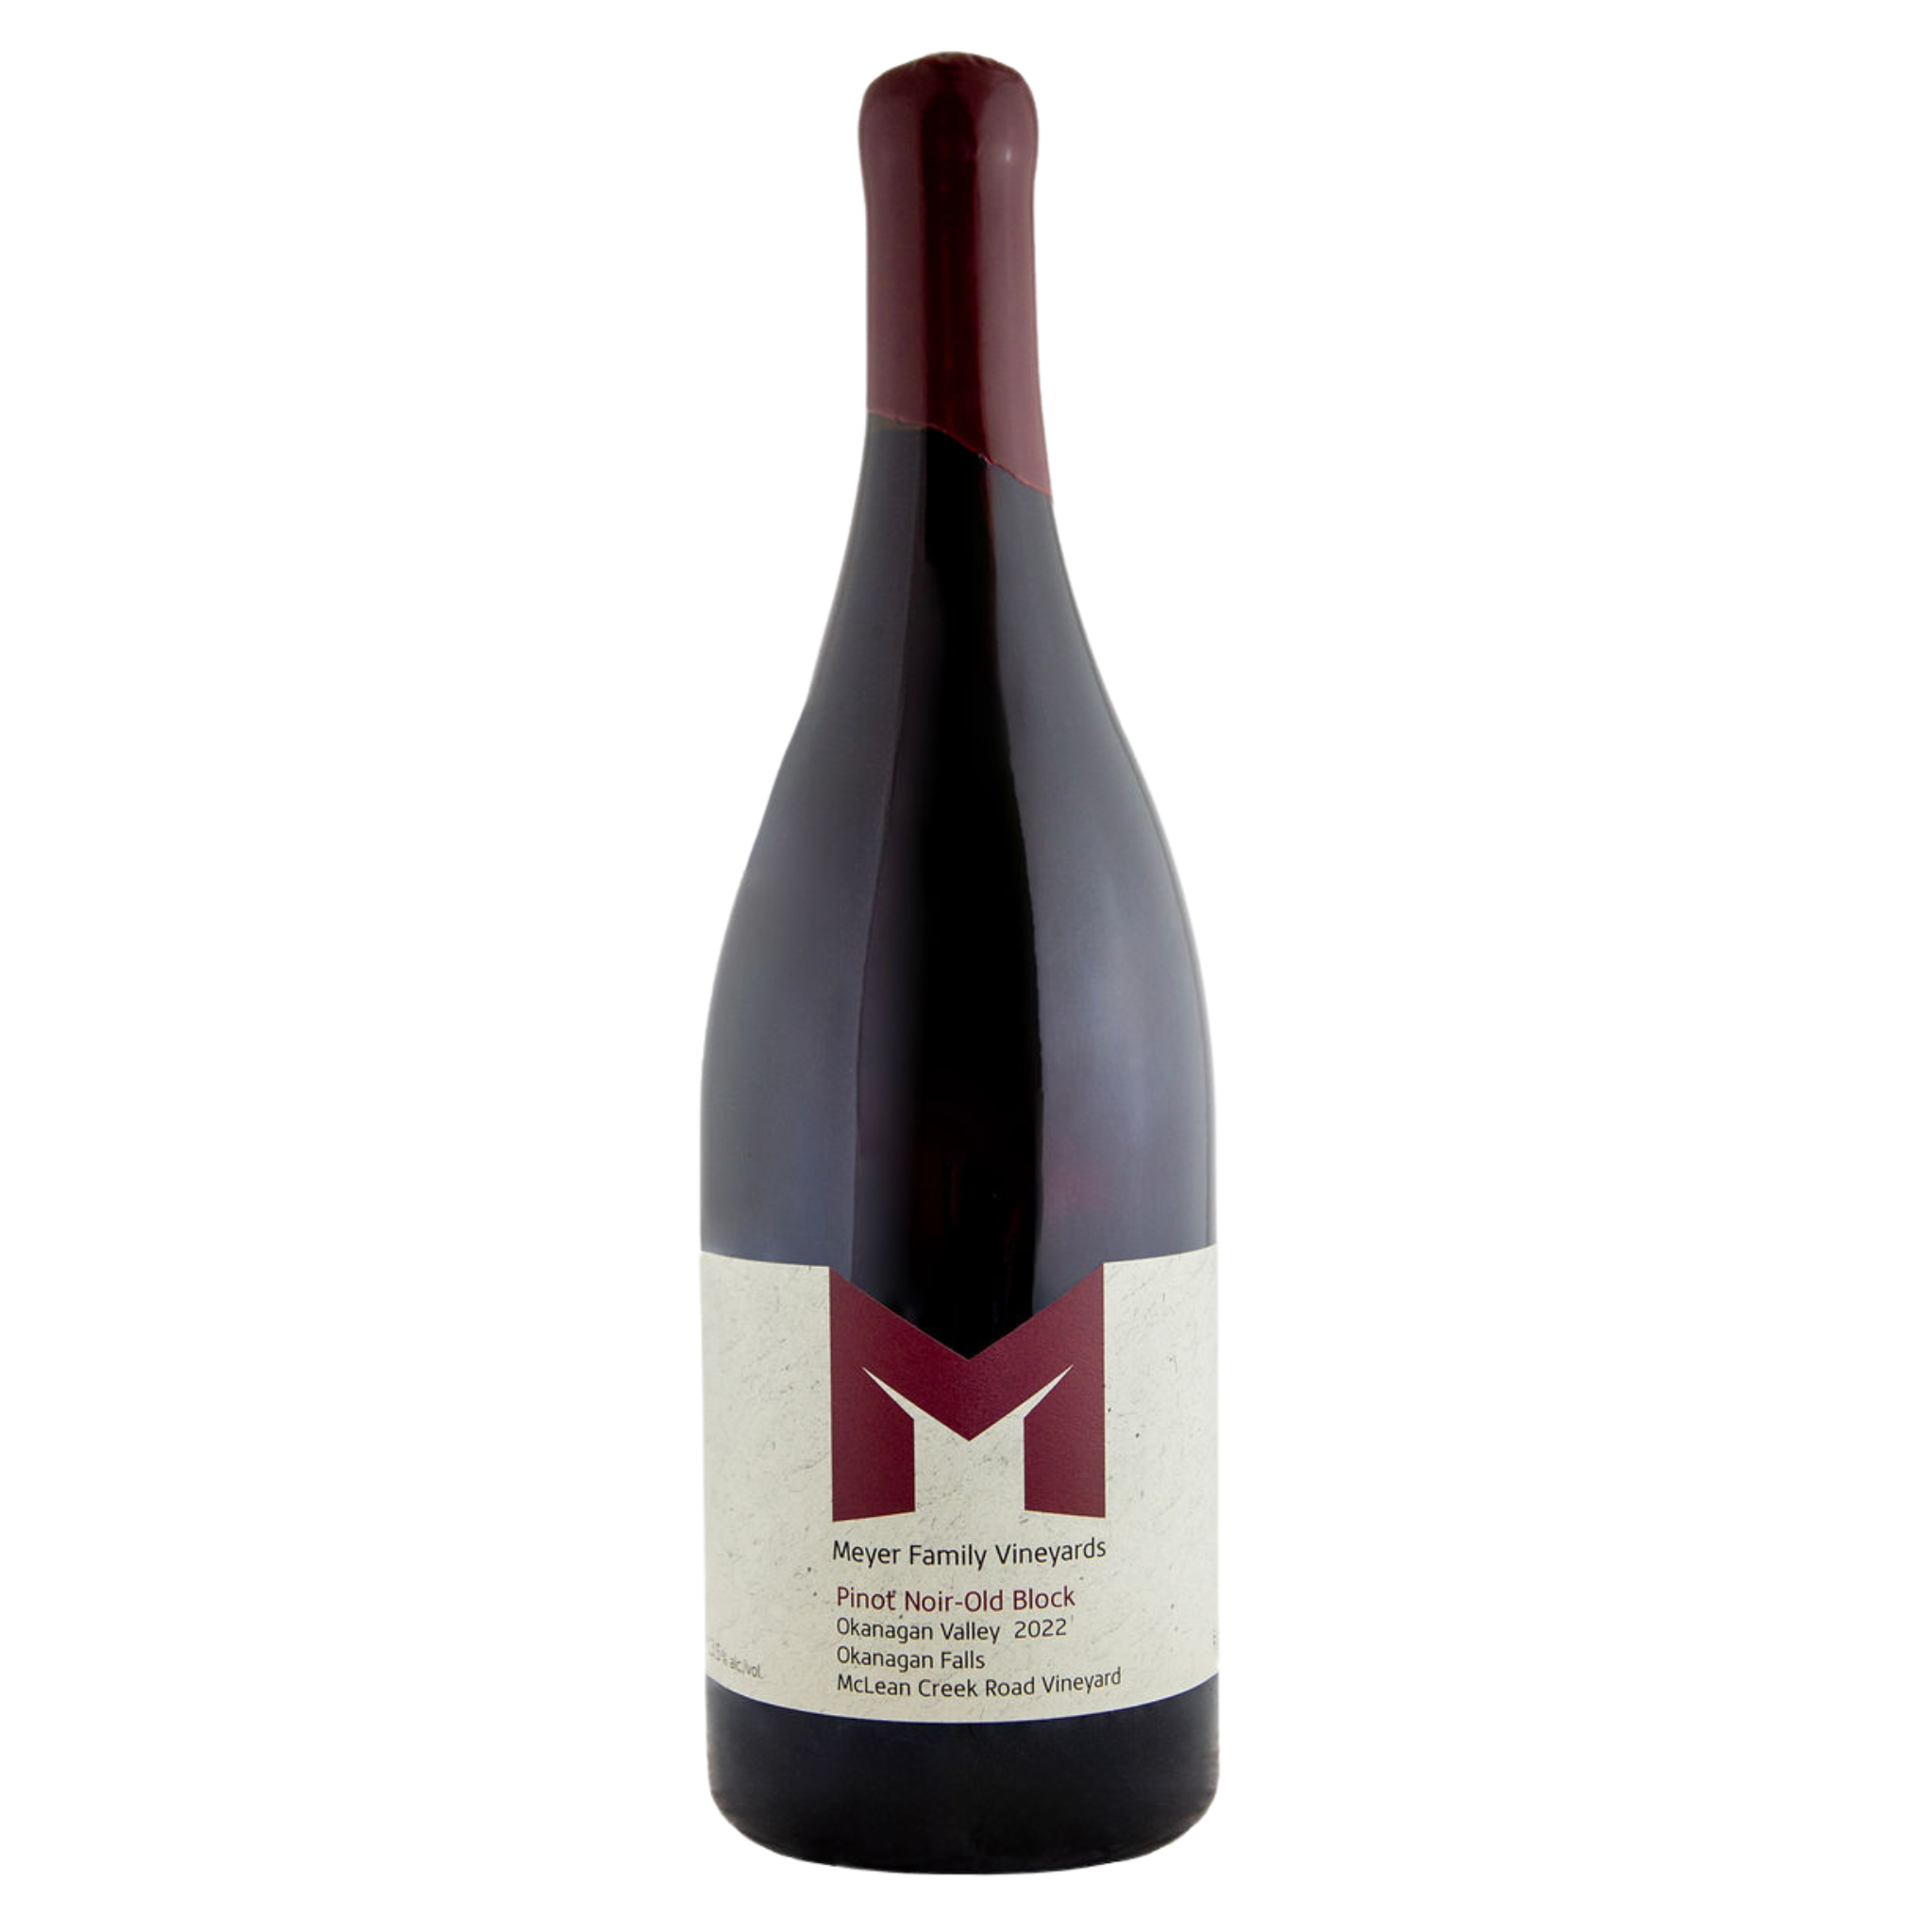 1.5L bottle of Old Block Pinot Noir 2022